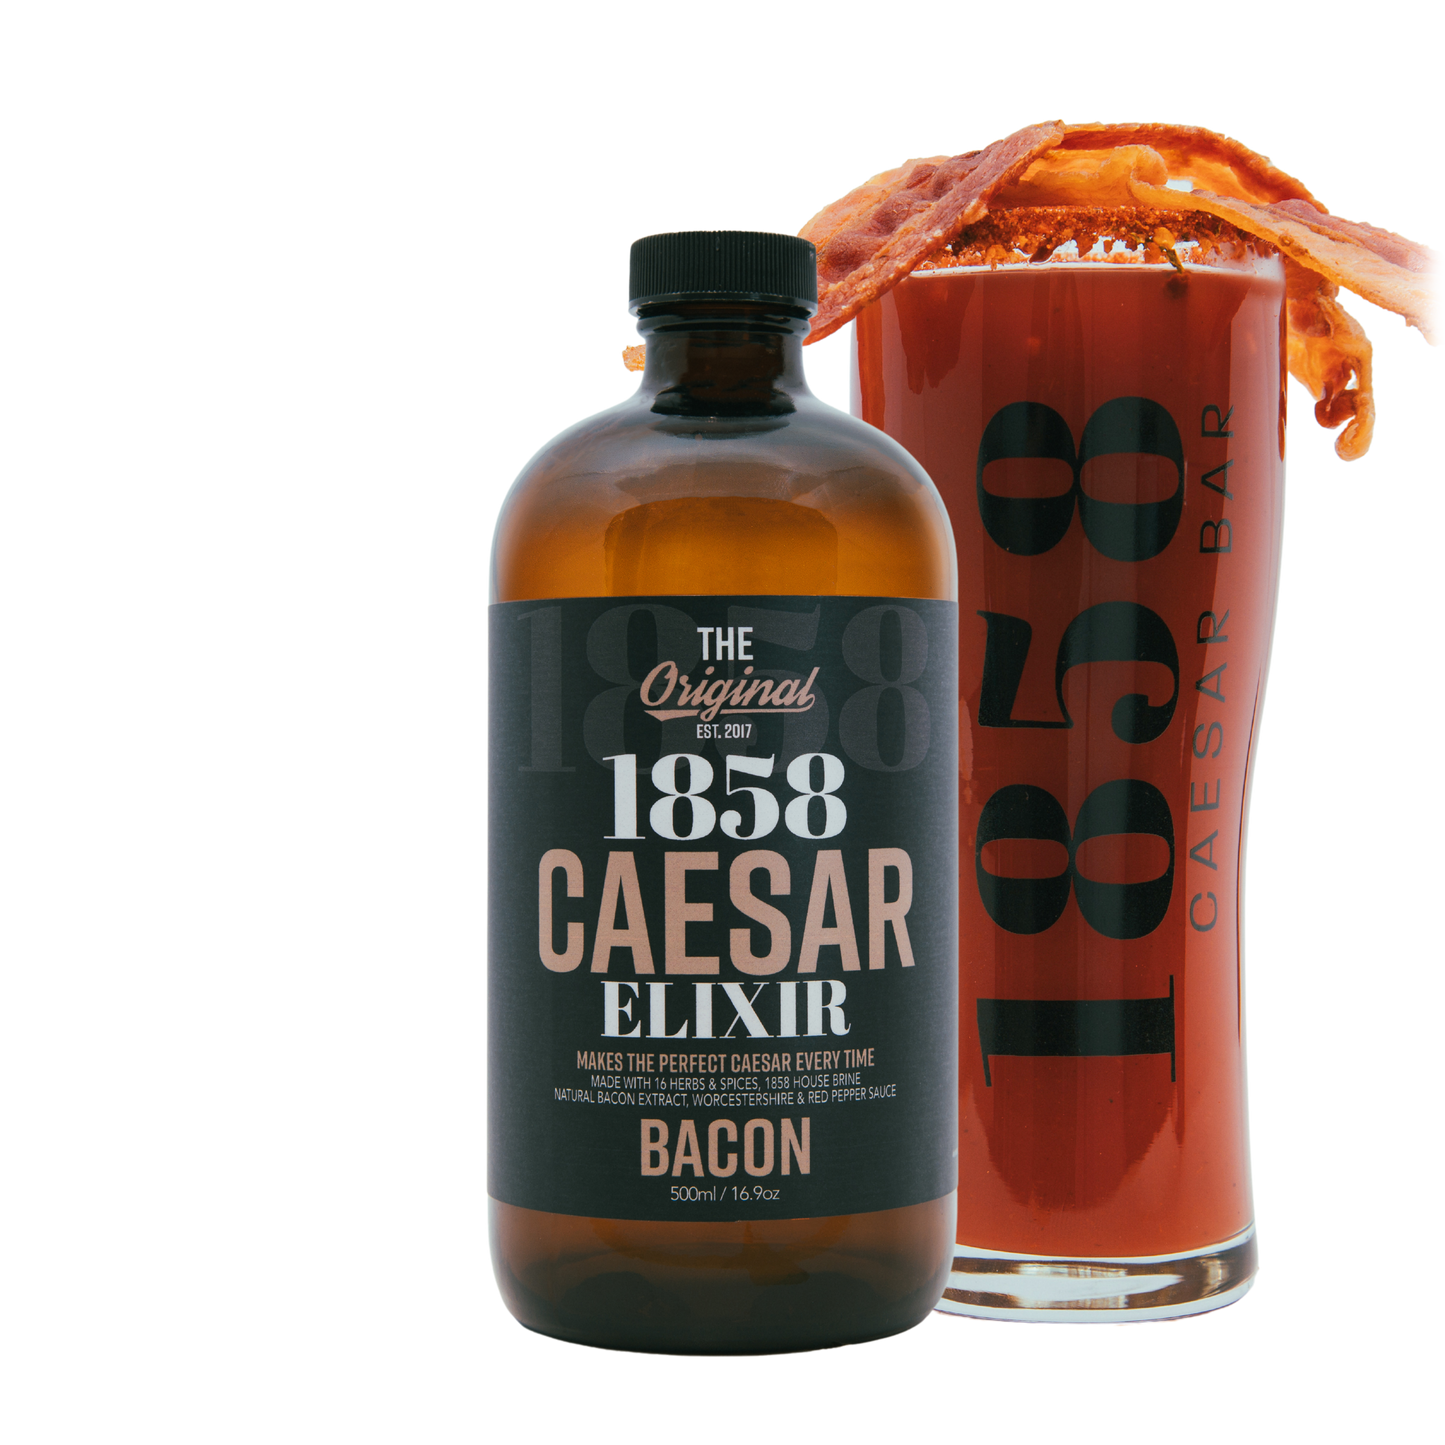 1858 bacon flavoured caesar elixir with Bacon Garnished caesar